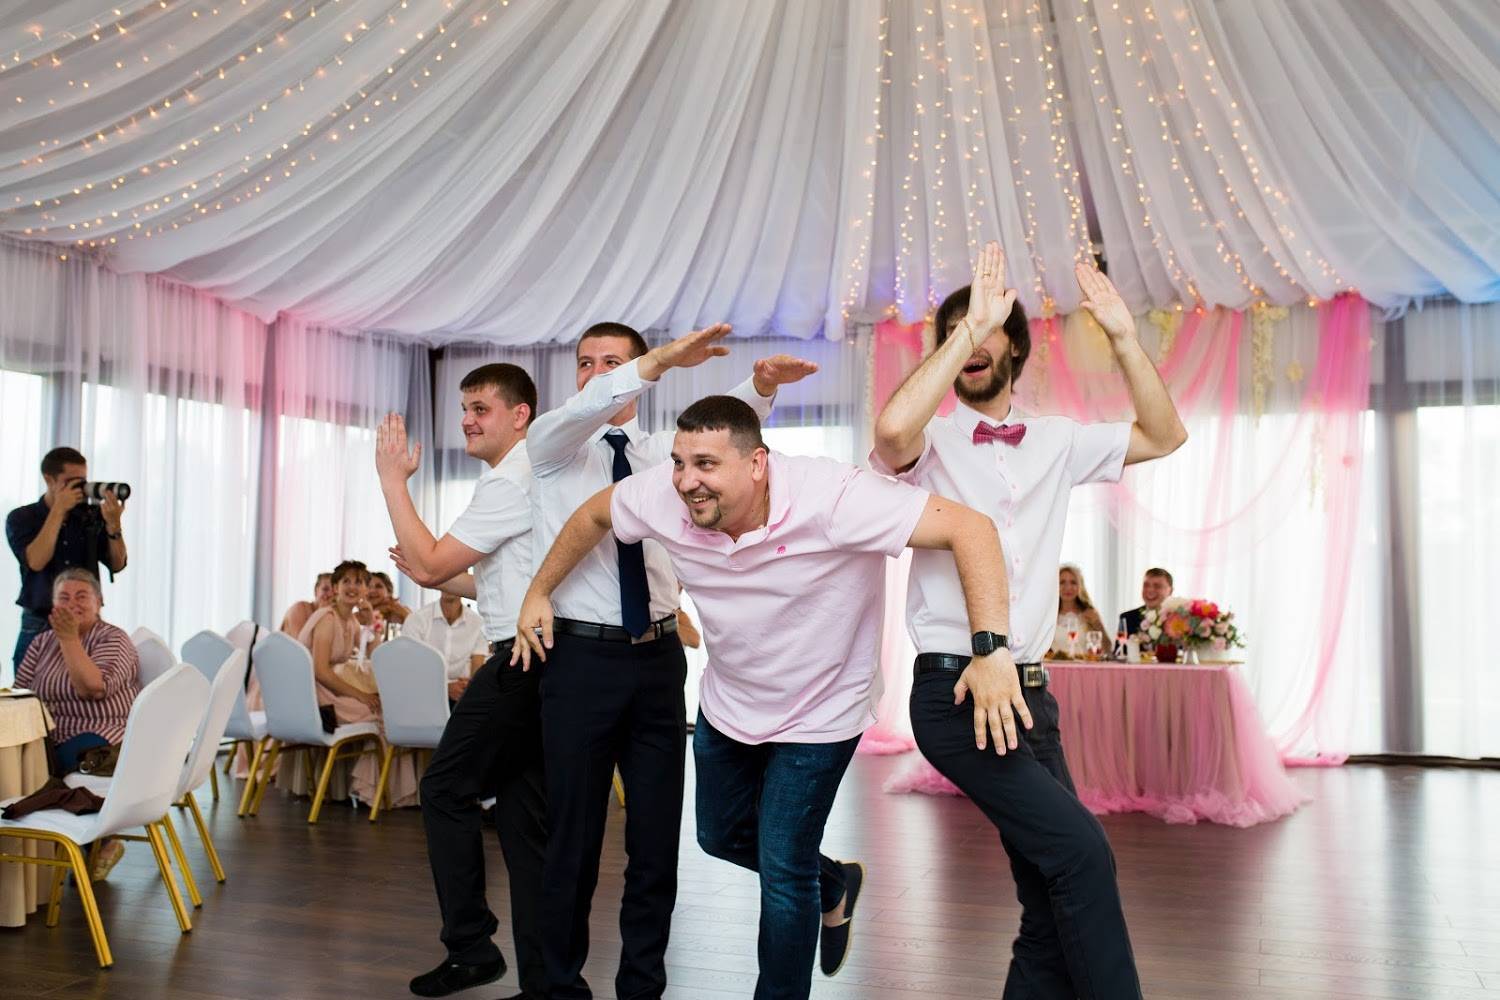 Флешмоб на свадьбах — самая яркая идея сюрприза от друзей